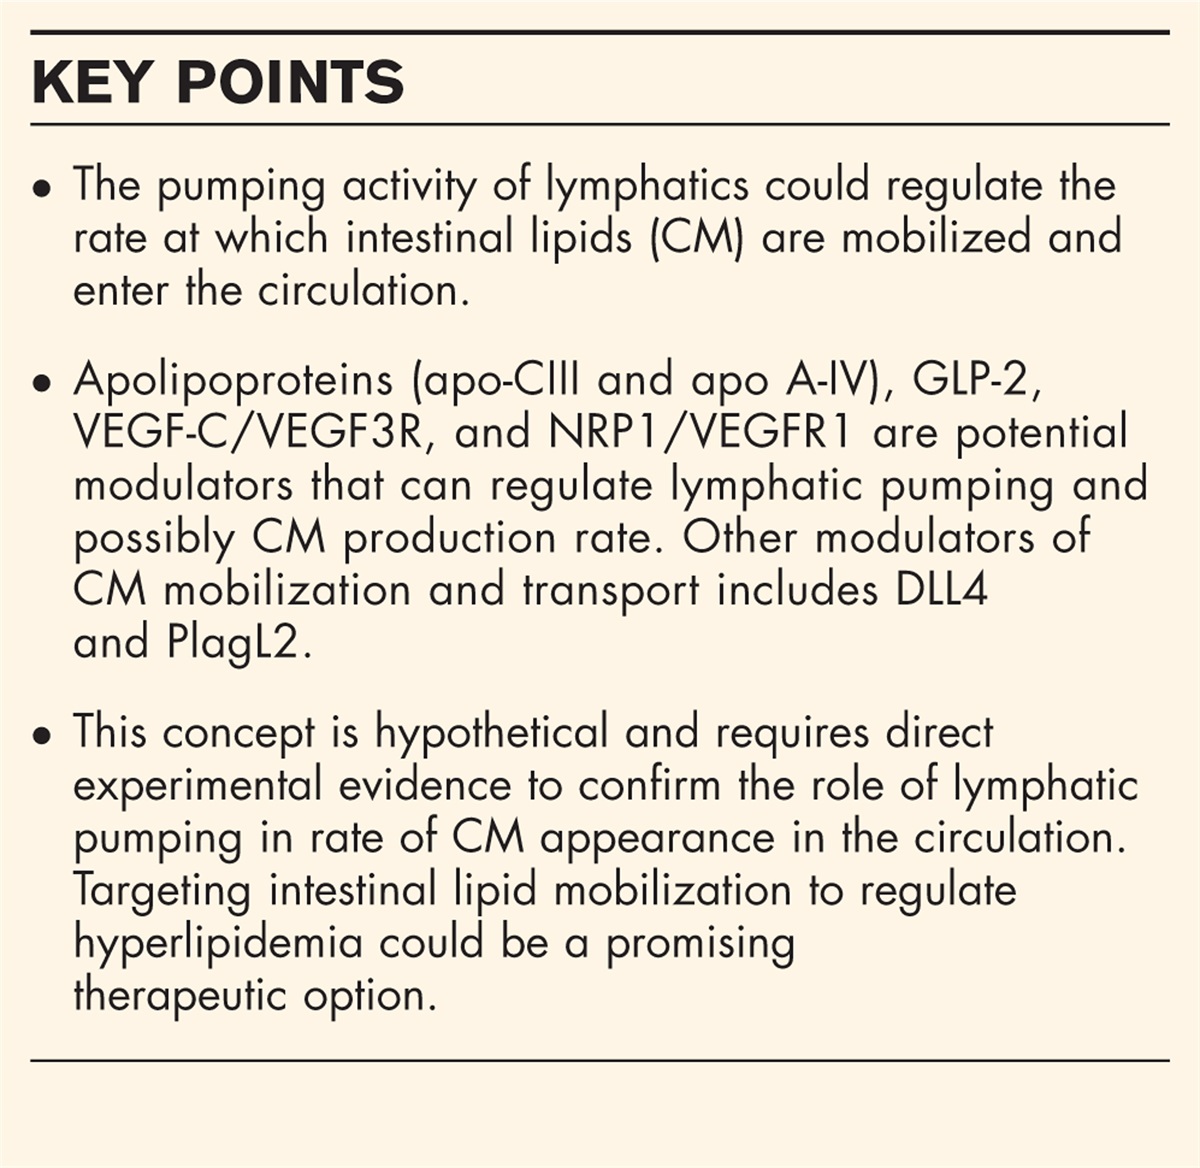 Lymphatics - not just a chylomicron conduit